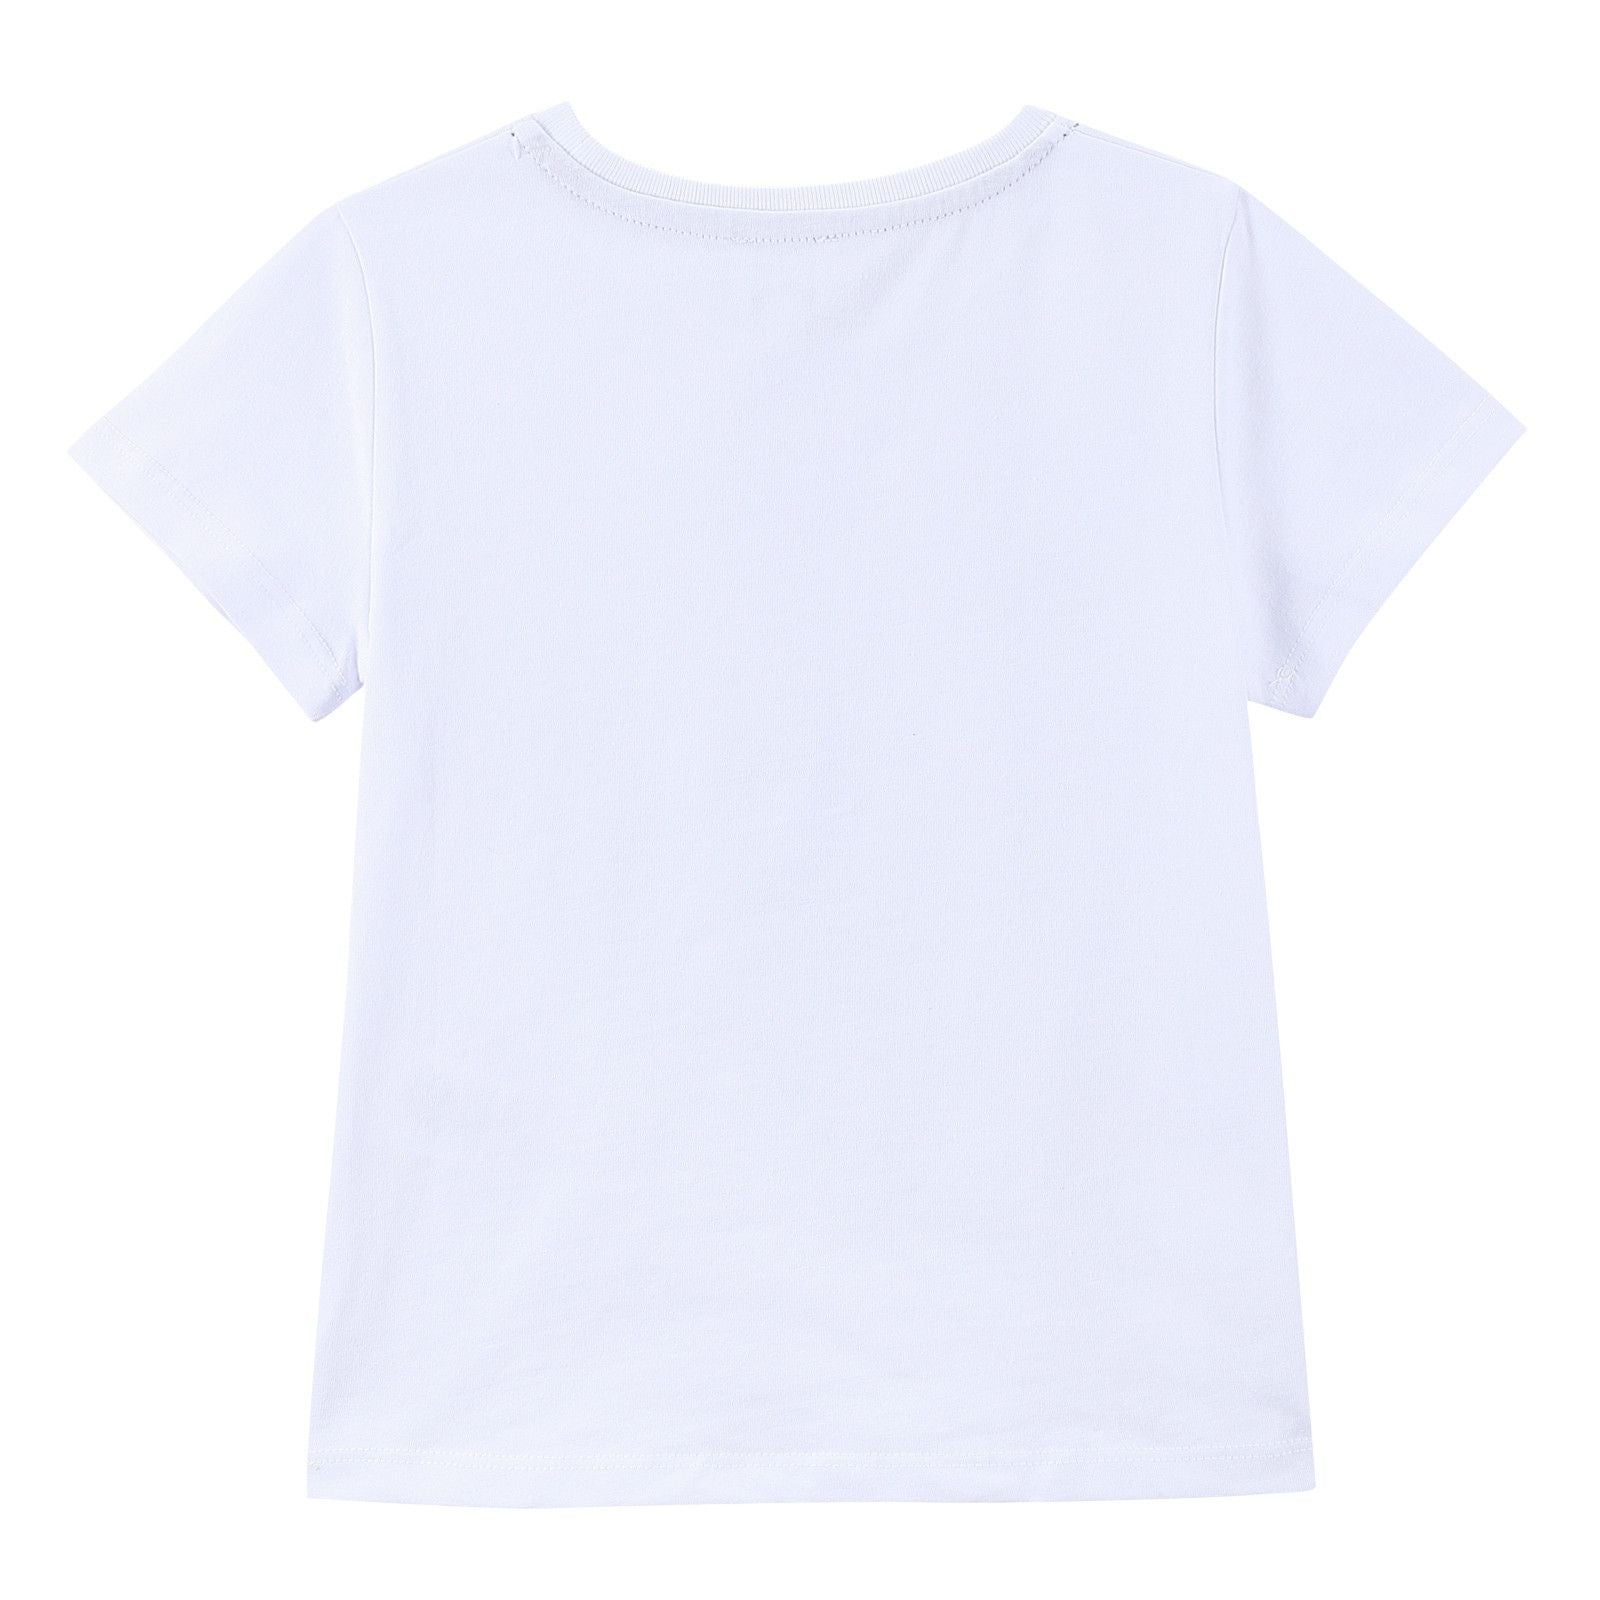 Boys White Cotton T-Shirt With Black Tie Print - CÉMAROSE | Children's Fashion Store - 2